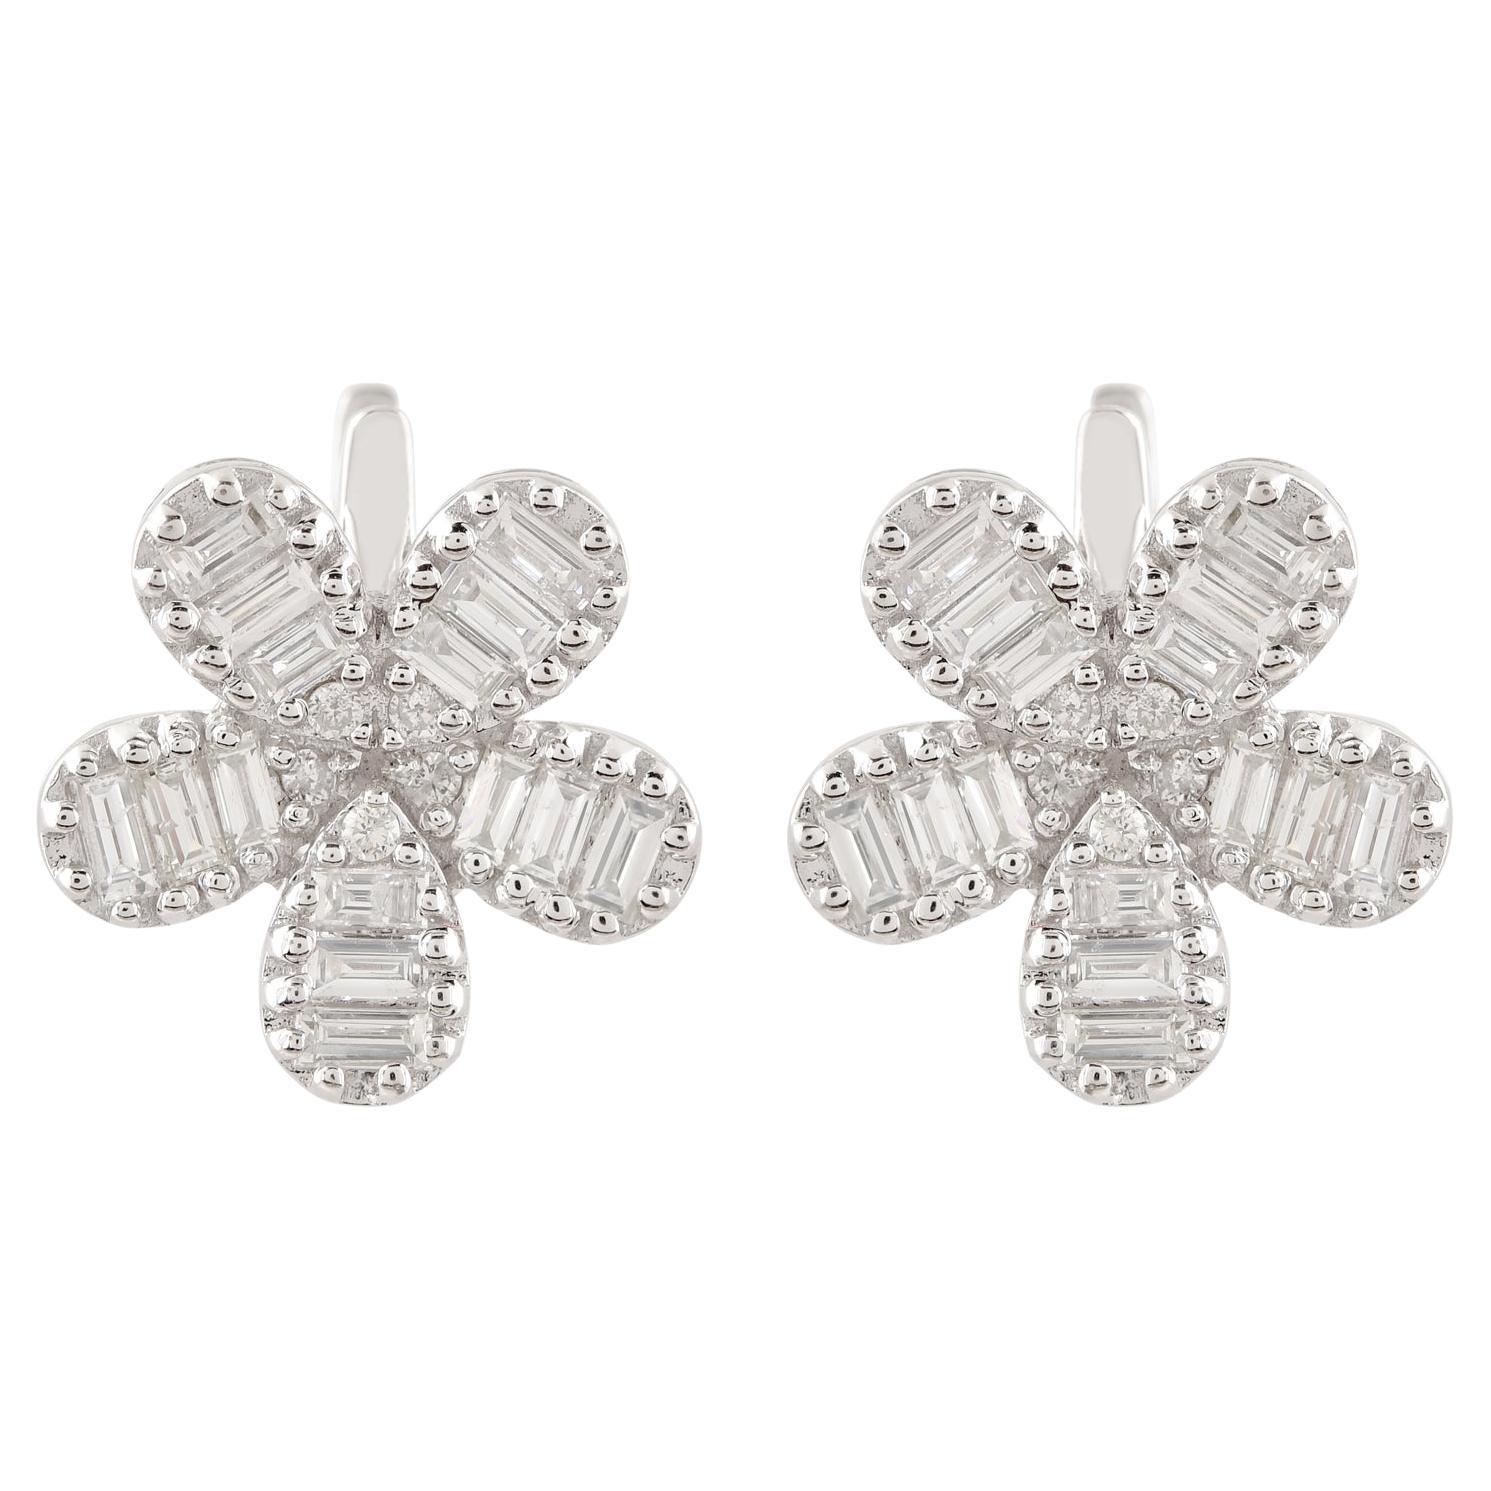 1.01 Carat Baguette Diamond Flower Stud Earrings Solid 14k White Gold Jewelry For Sale